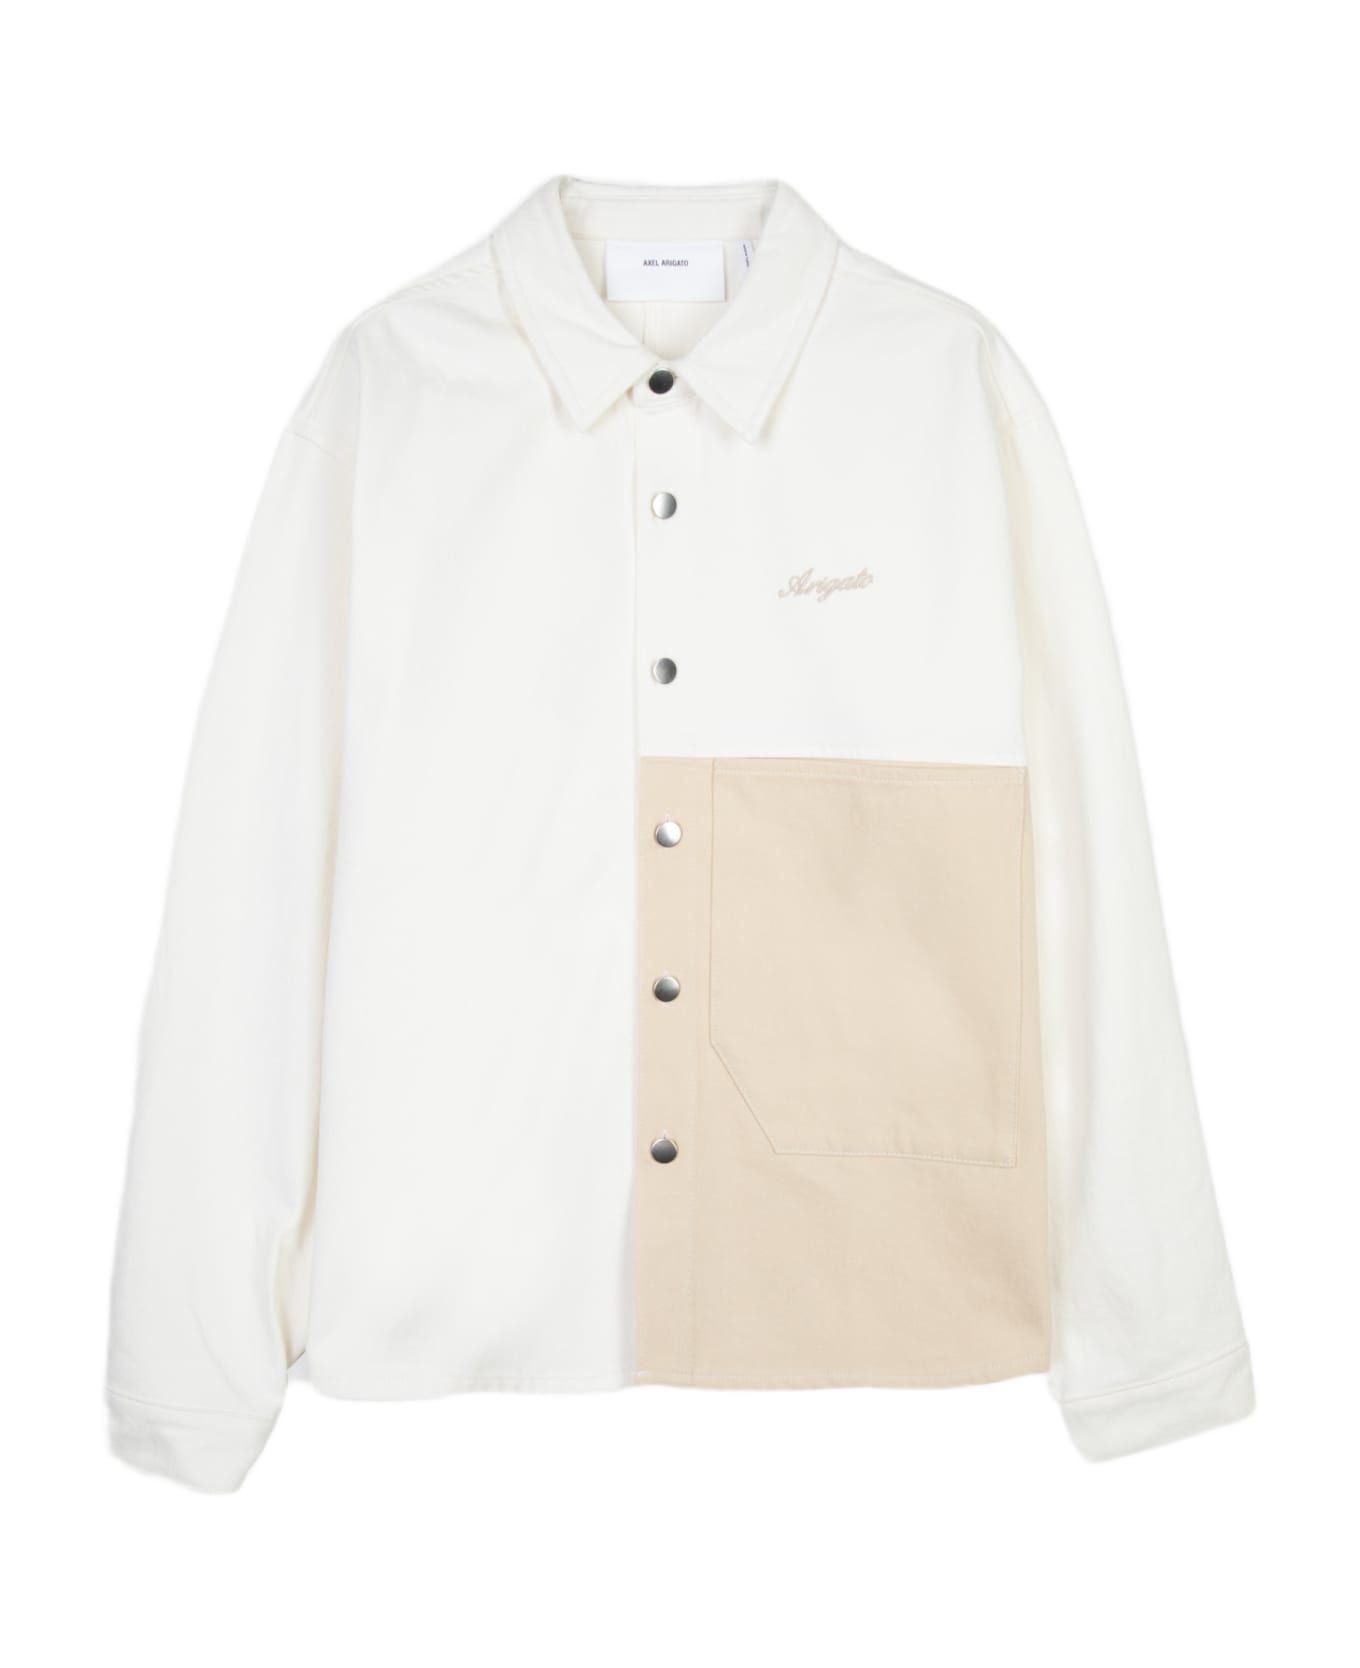 Axel Arigato Block Shirt Off white and beige colorblock overshirt - Block shirt - Ecrù シャツ